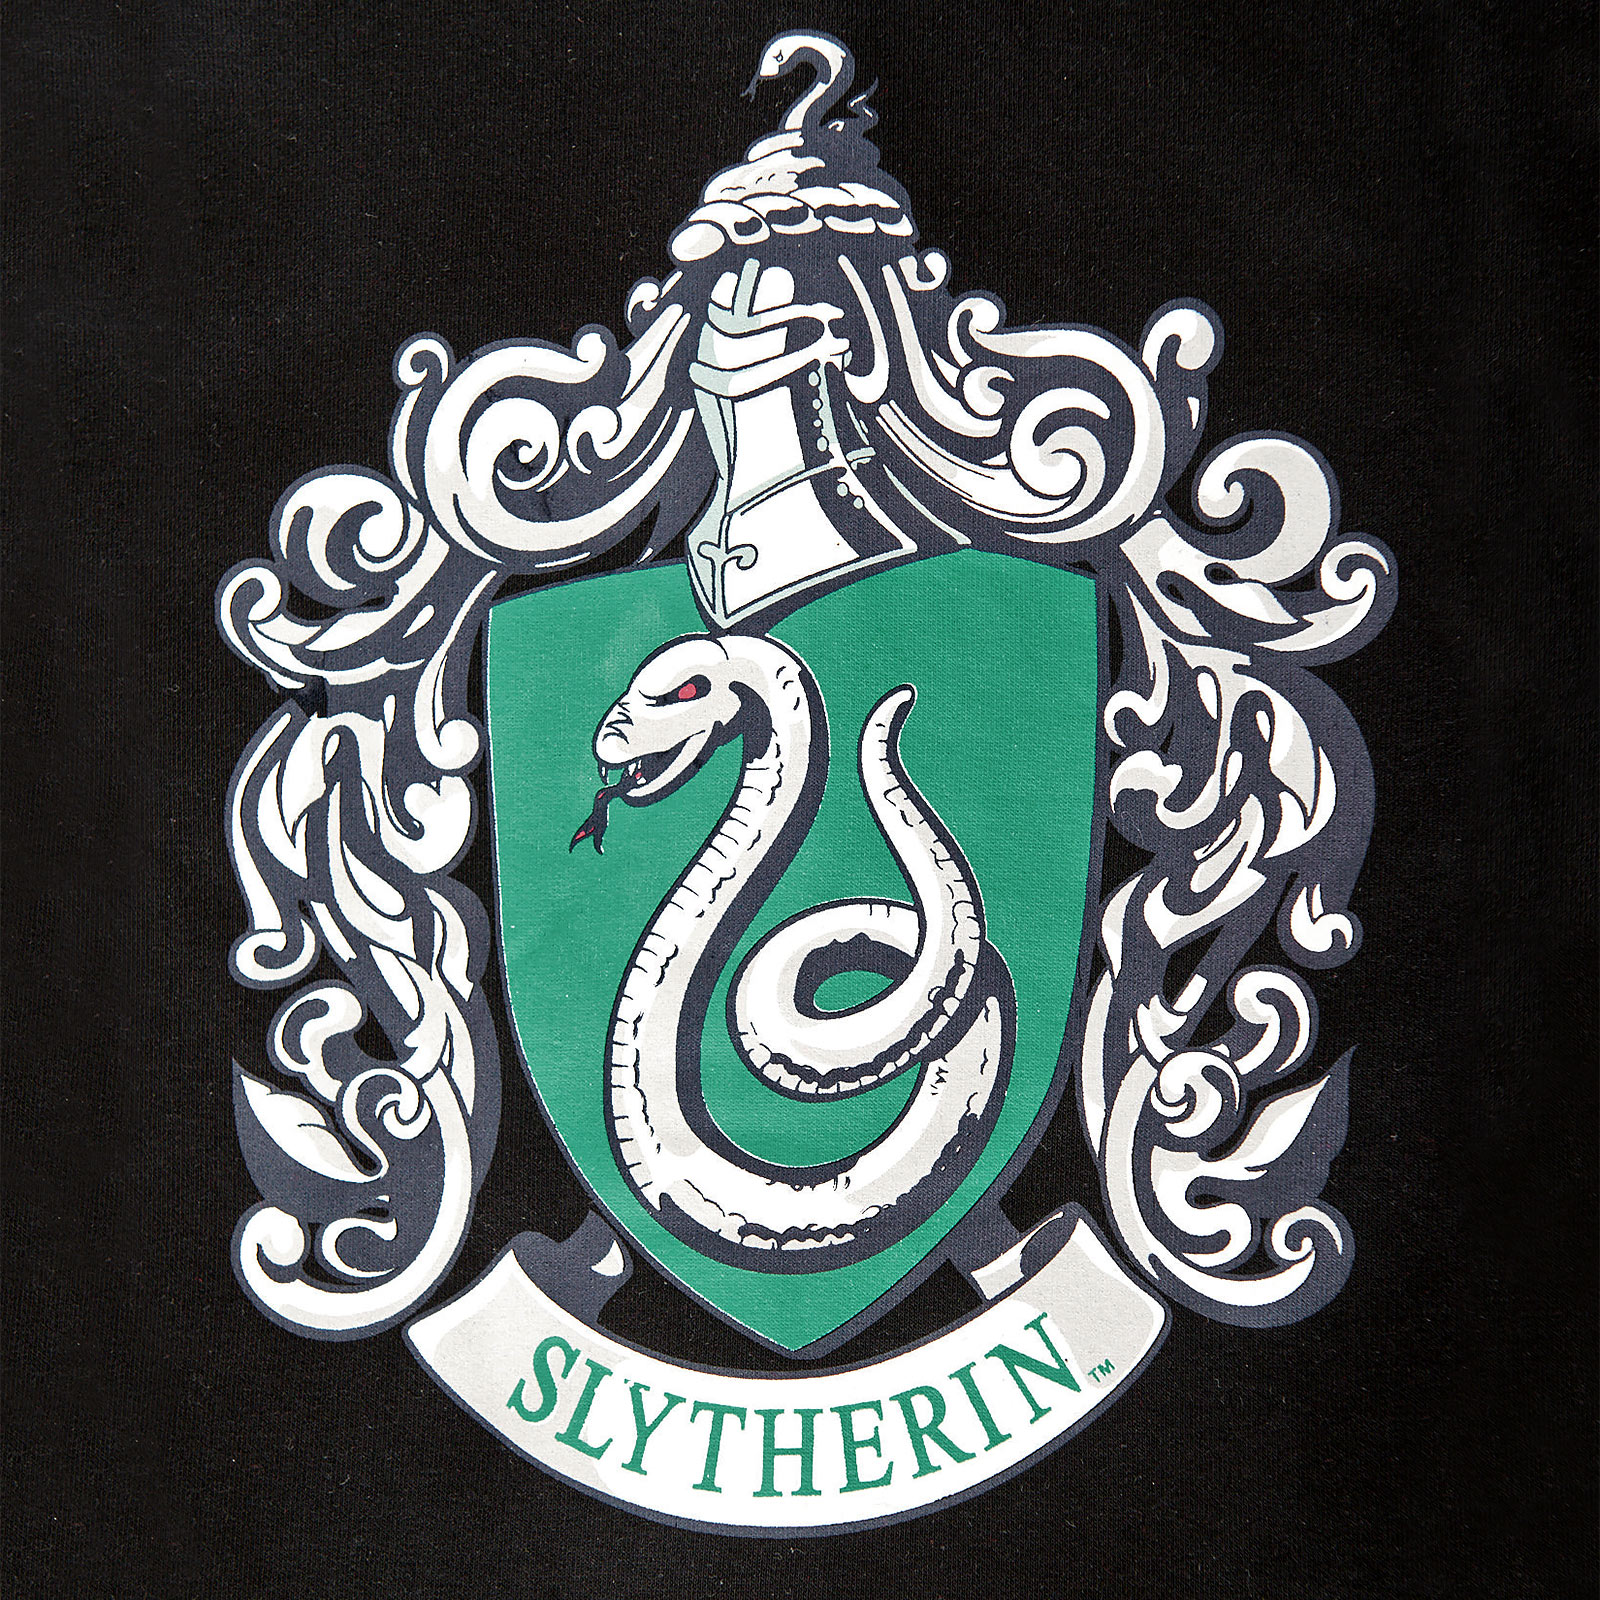 Harry Potter - Slytherin Crest College Jacket Women's Black